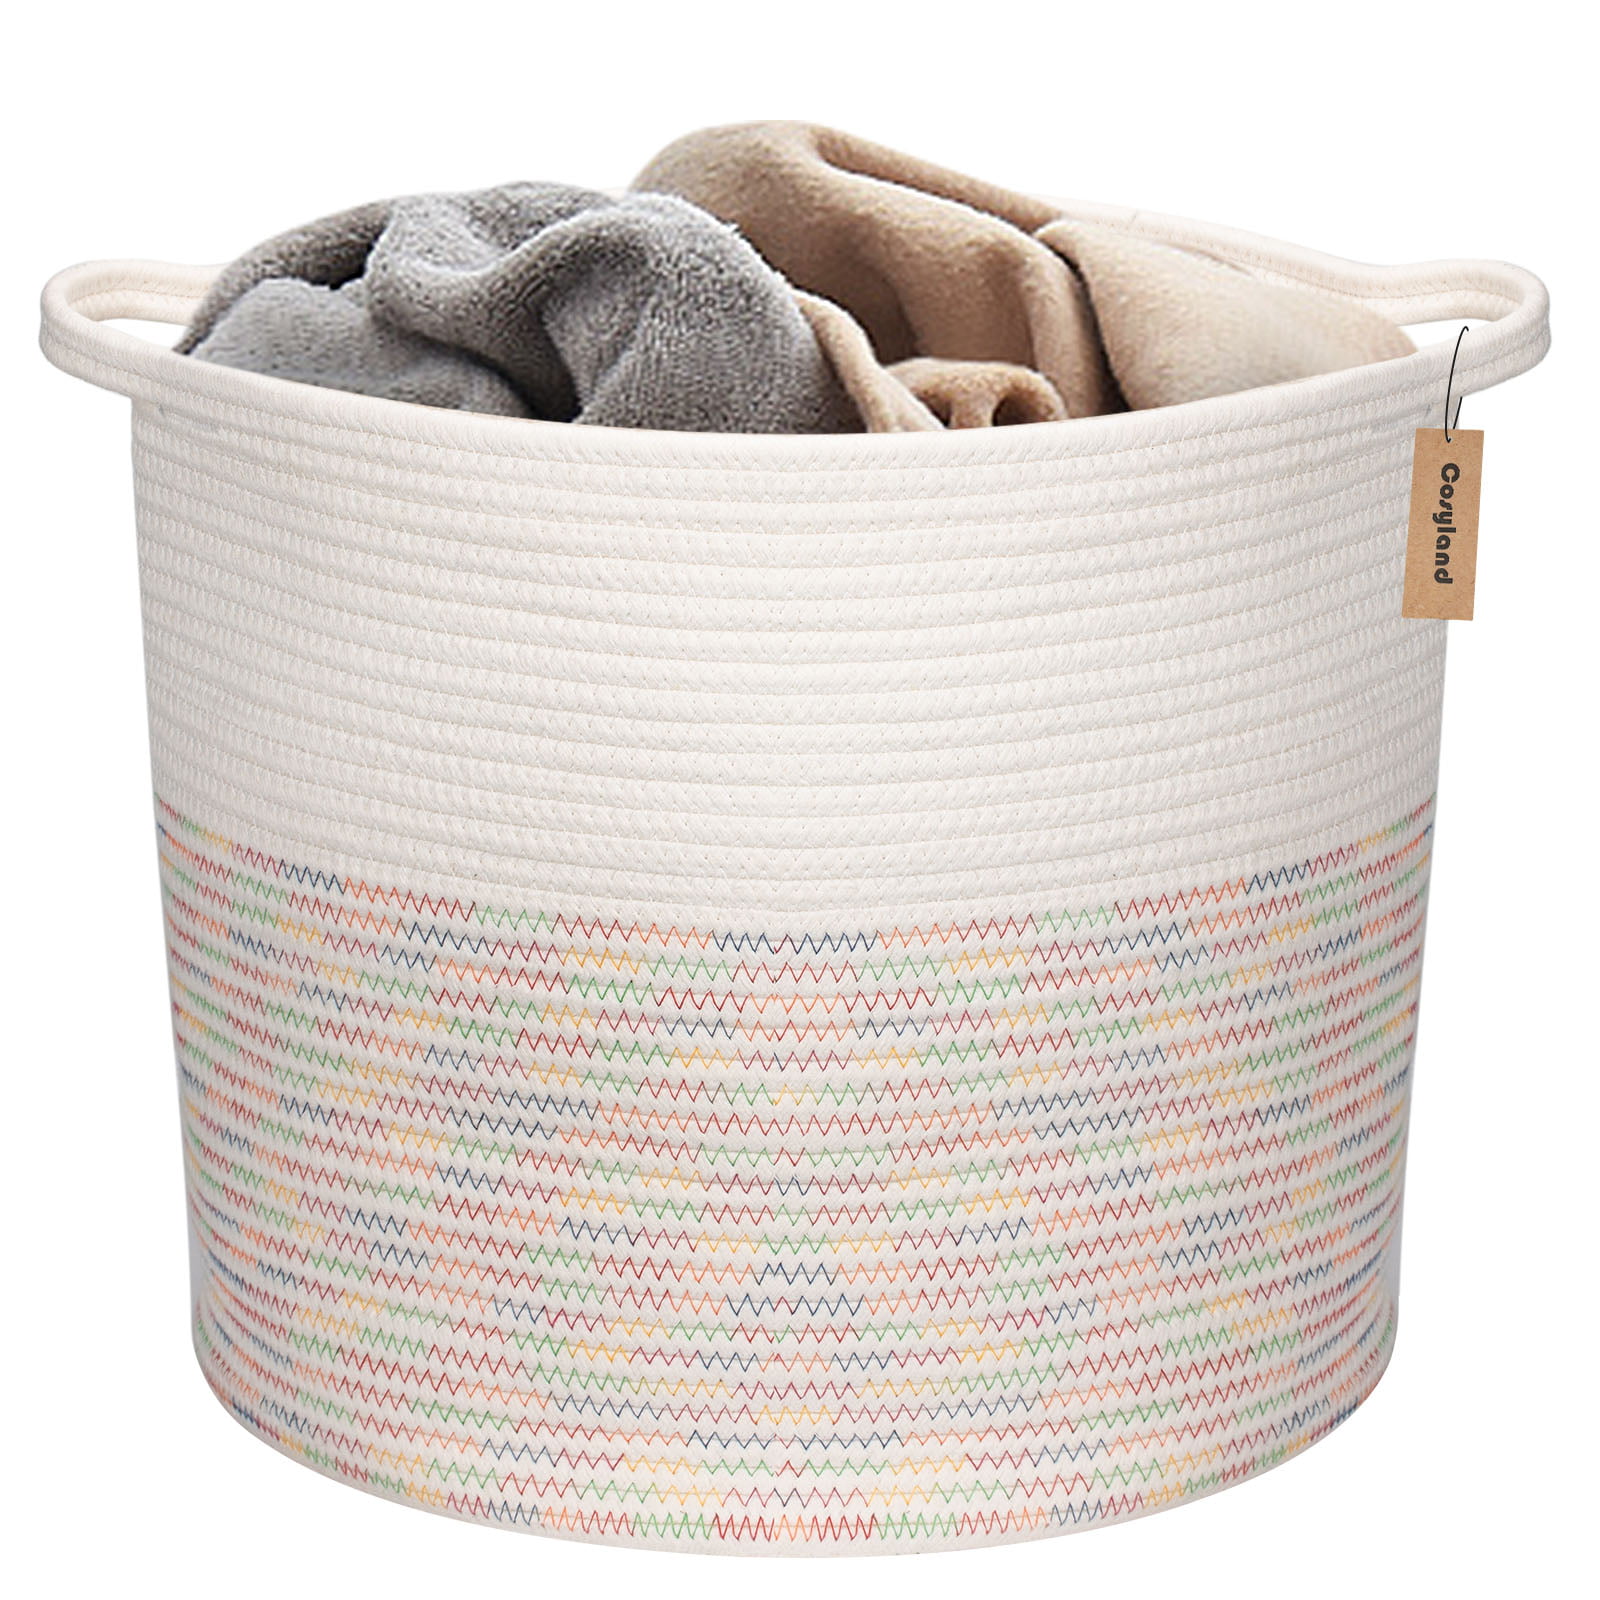 Laundry Basket Toy Bin Basket Towels Laundry Hampe Home Decor 14 x 14 x 12 Woven Storage Blanket Basket with Handles Large Cotton Rope Basket 